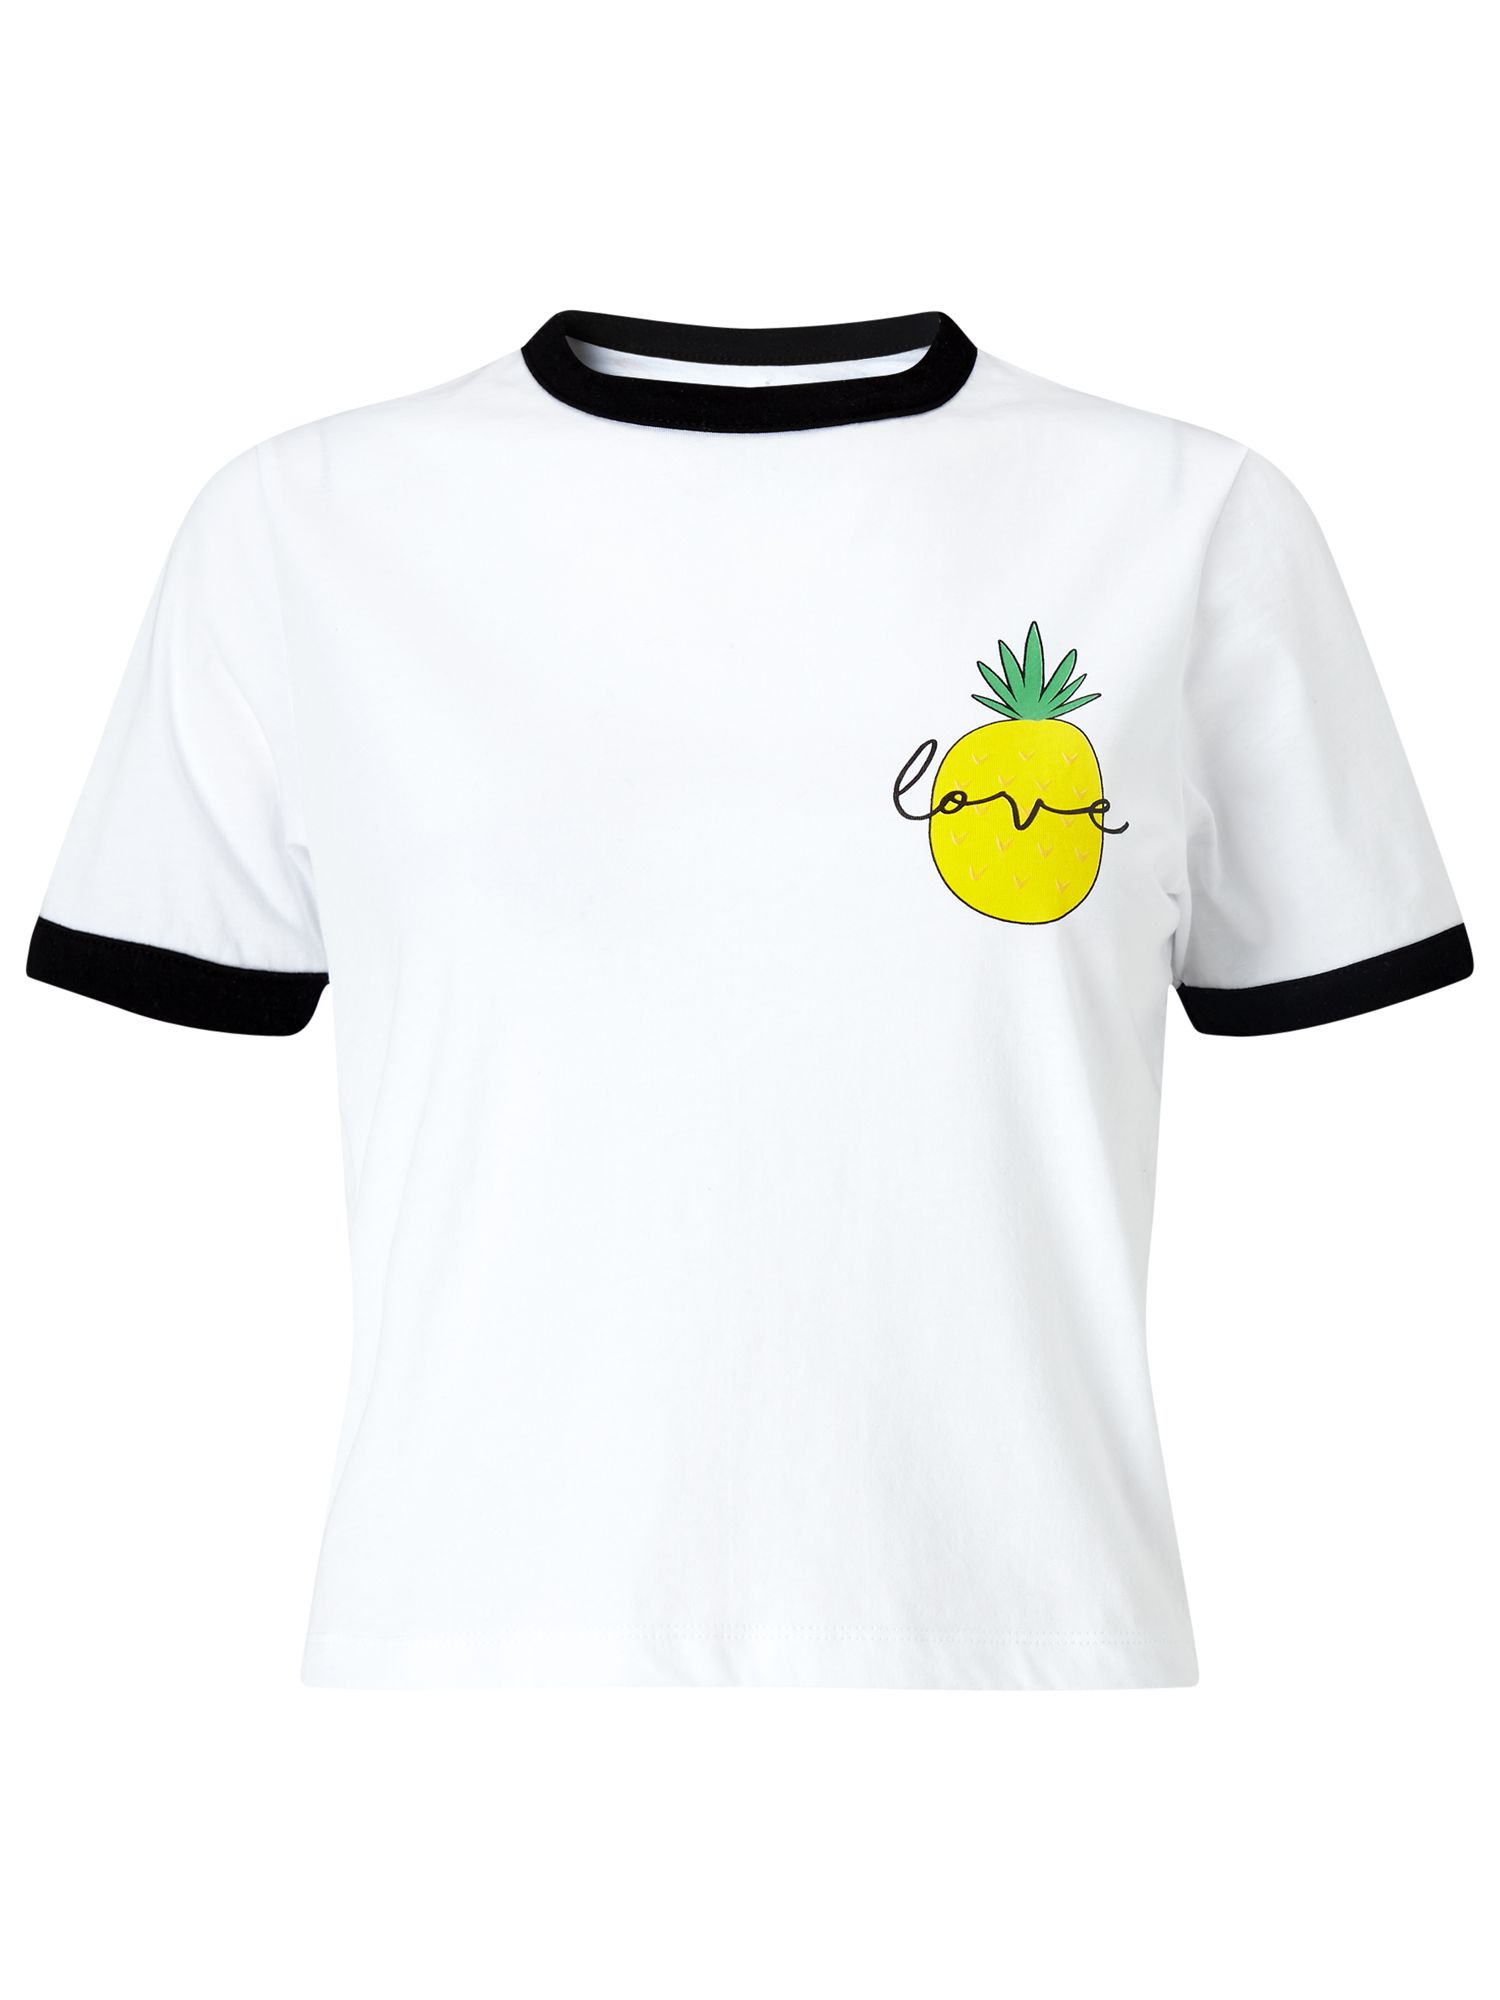 Miss Selfridge Pineapple T-Shirt, White